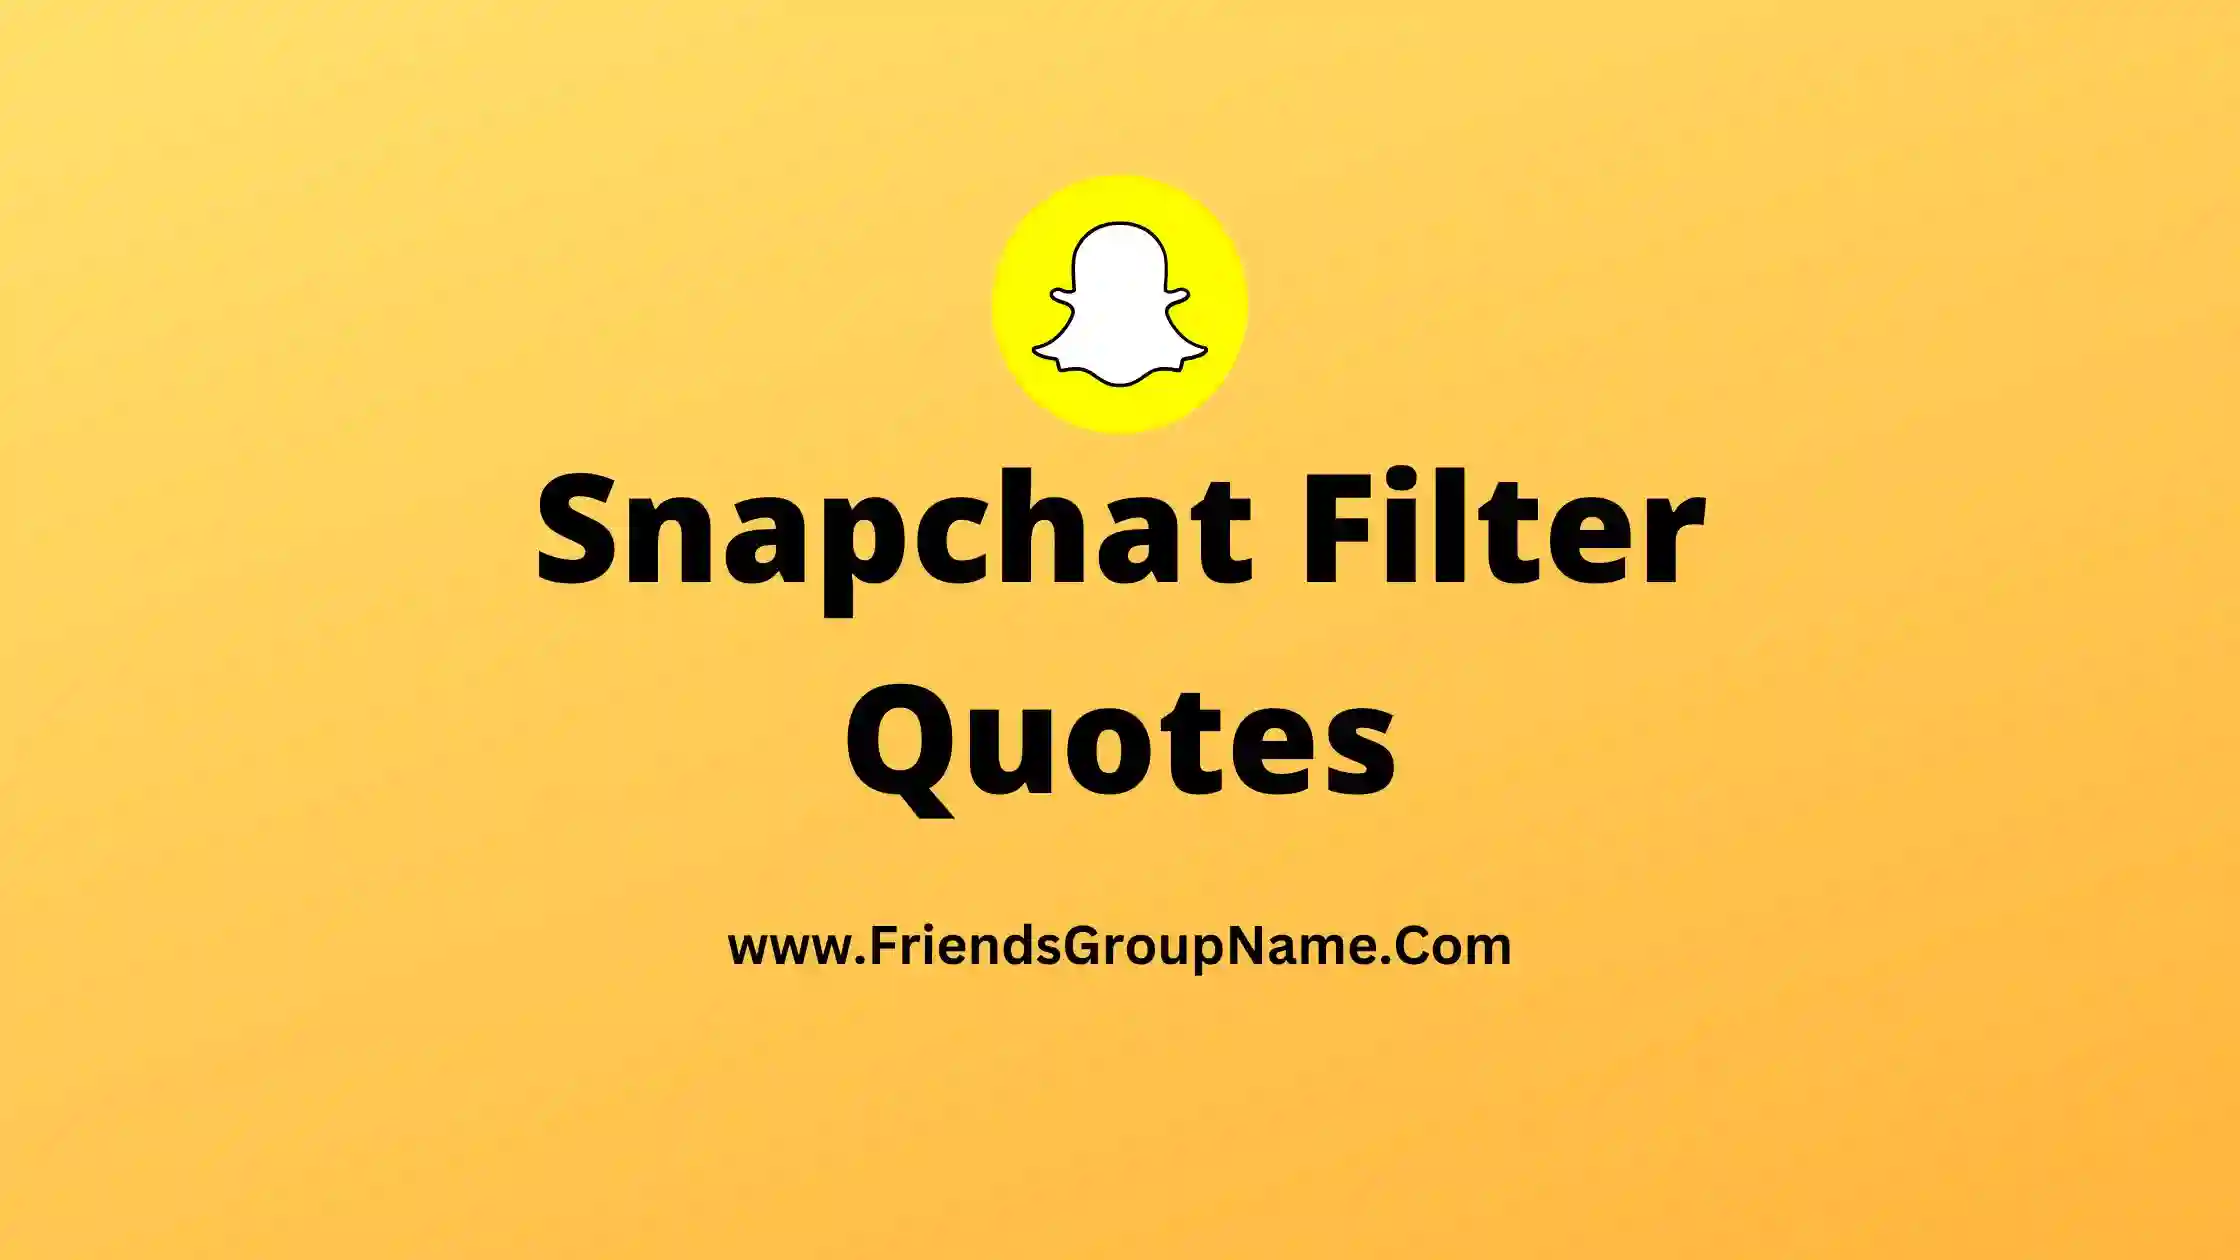 Snapchat Filter Quotes